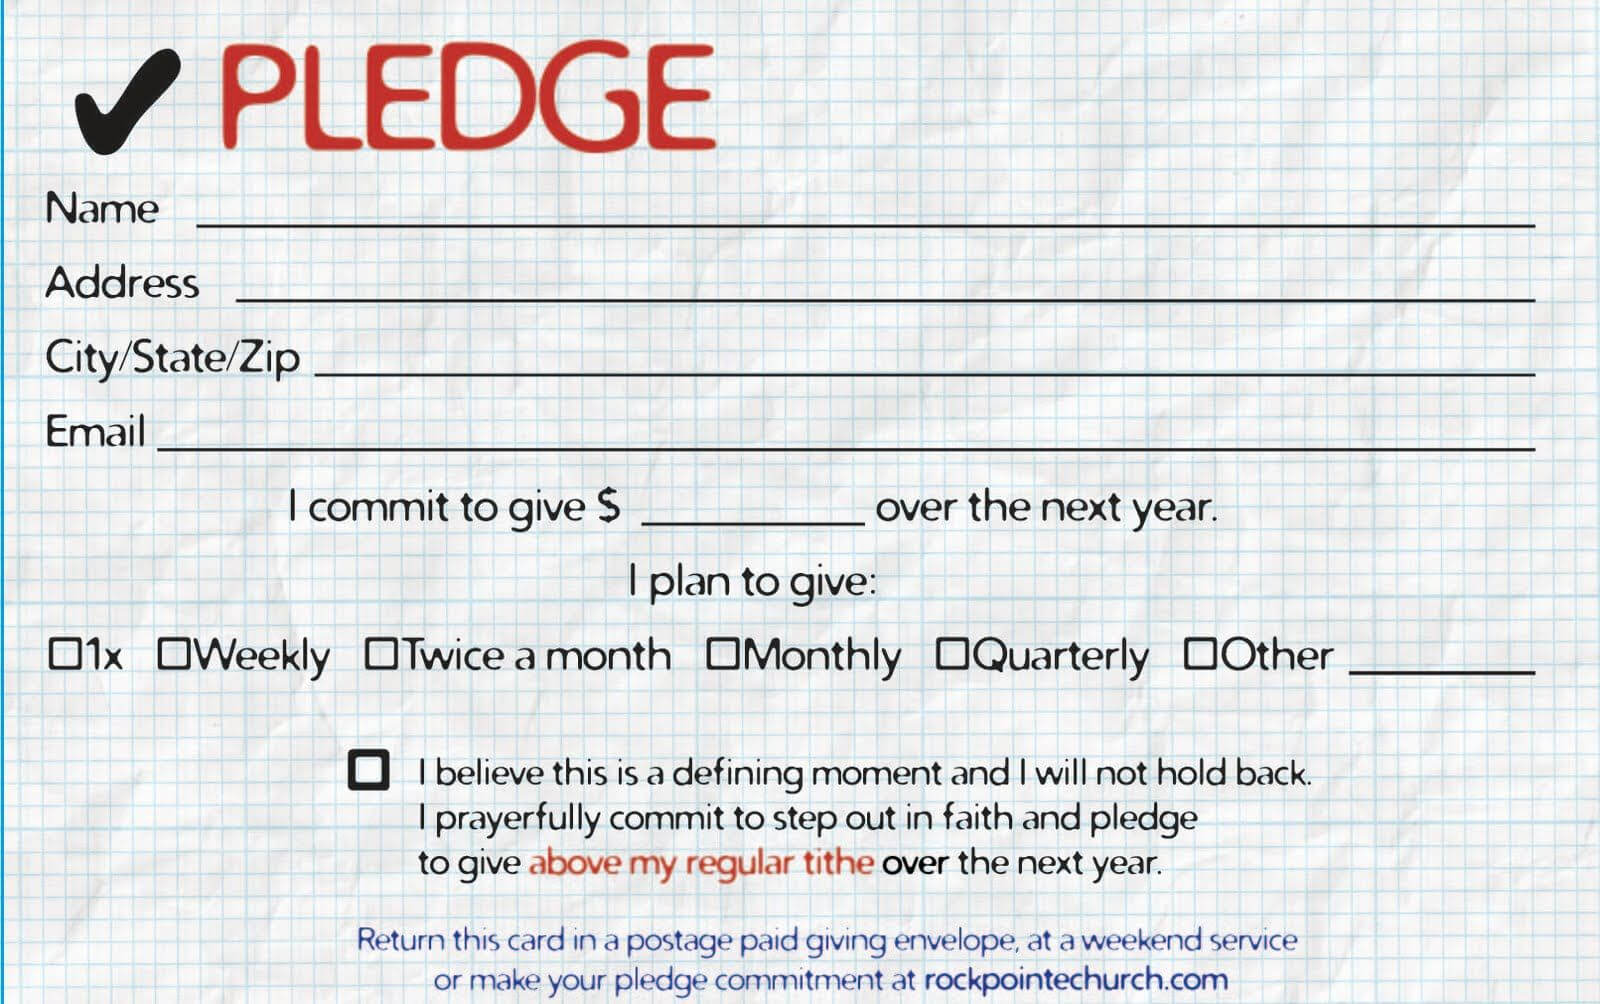 Pledge Cards For Churches | Pledge Card Templates | My Stuff In Pledge Card Template For Church